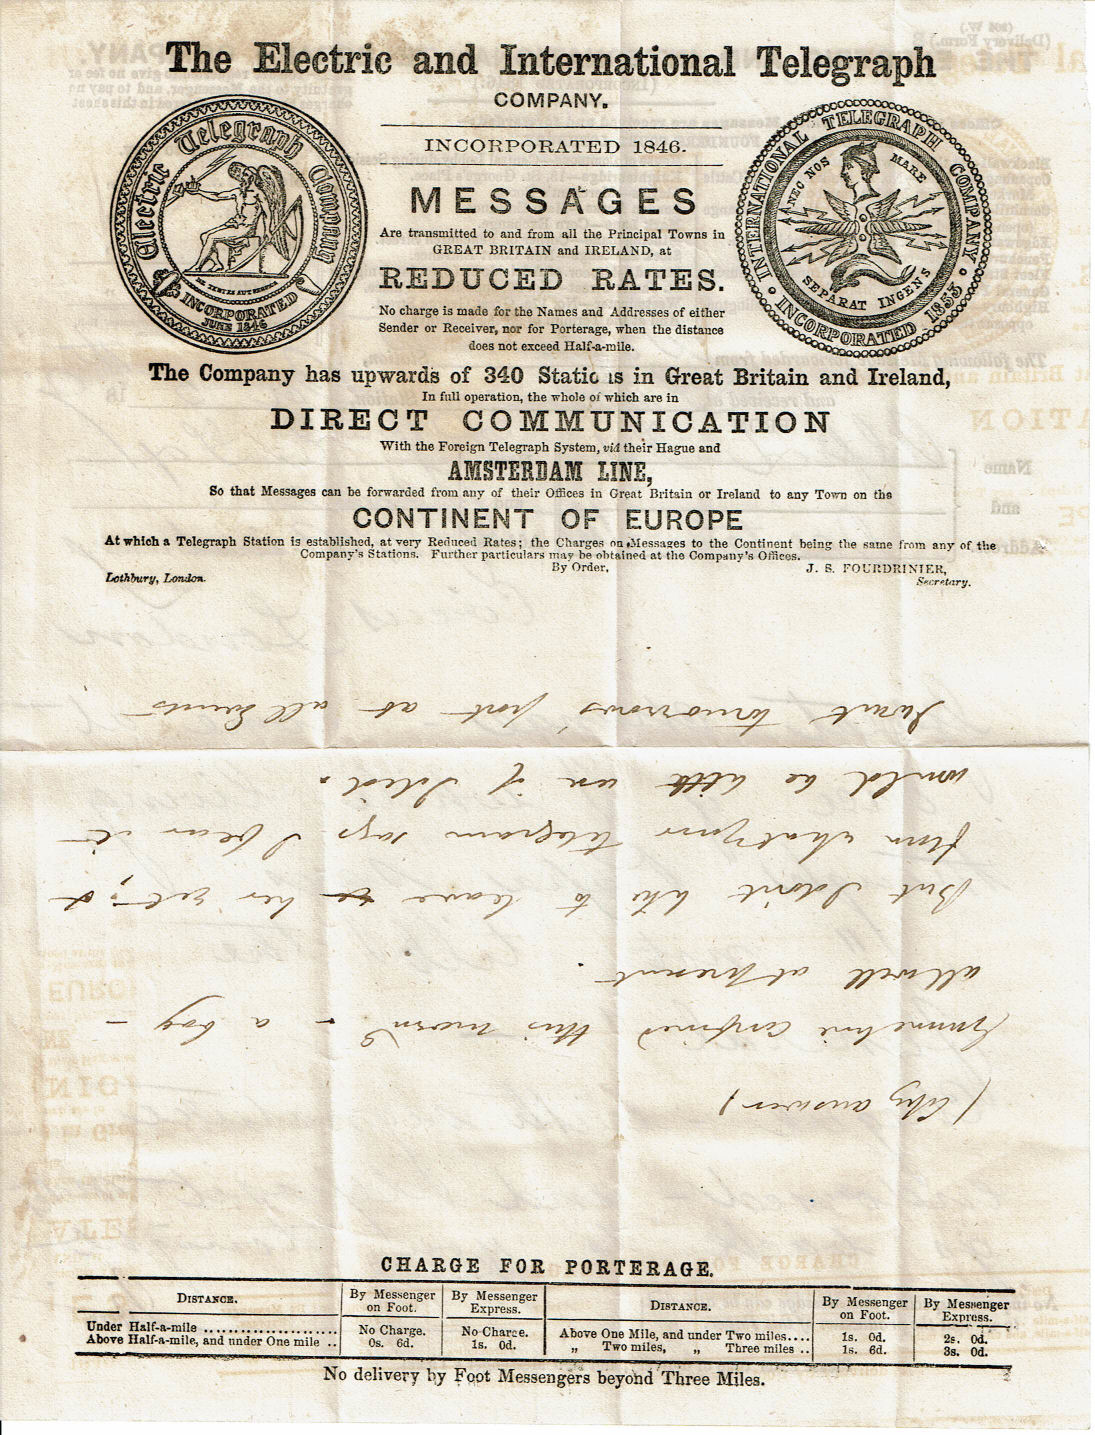 Electric Telegraph Company Form B - back.